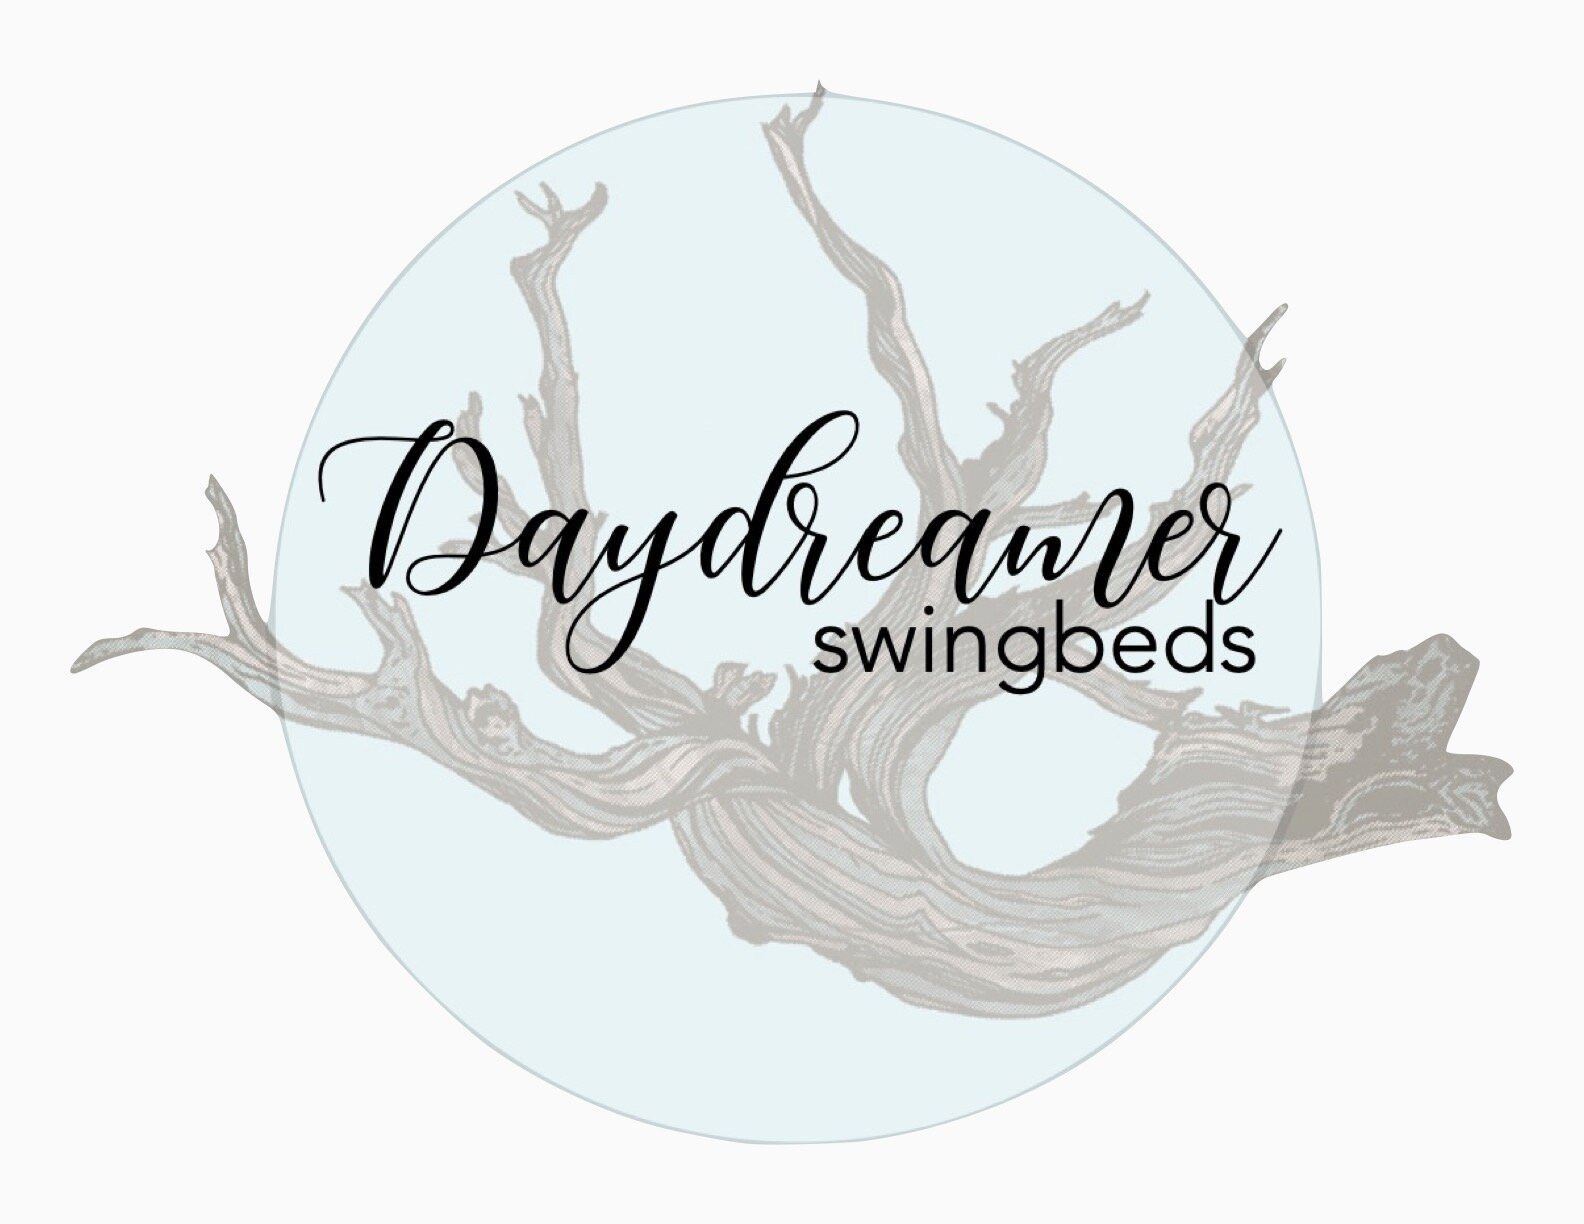 Daydreamer swing beds